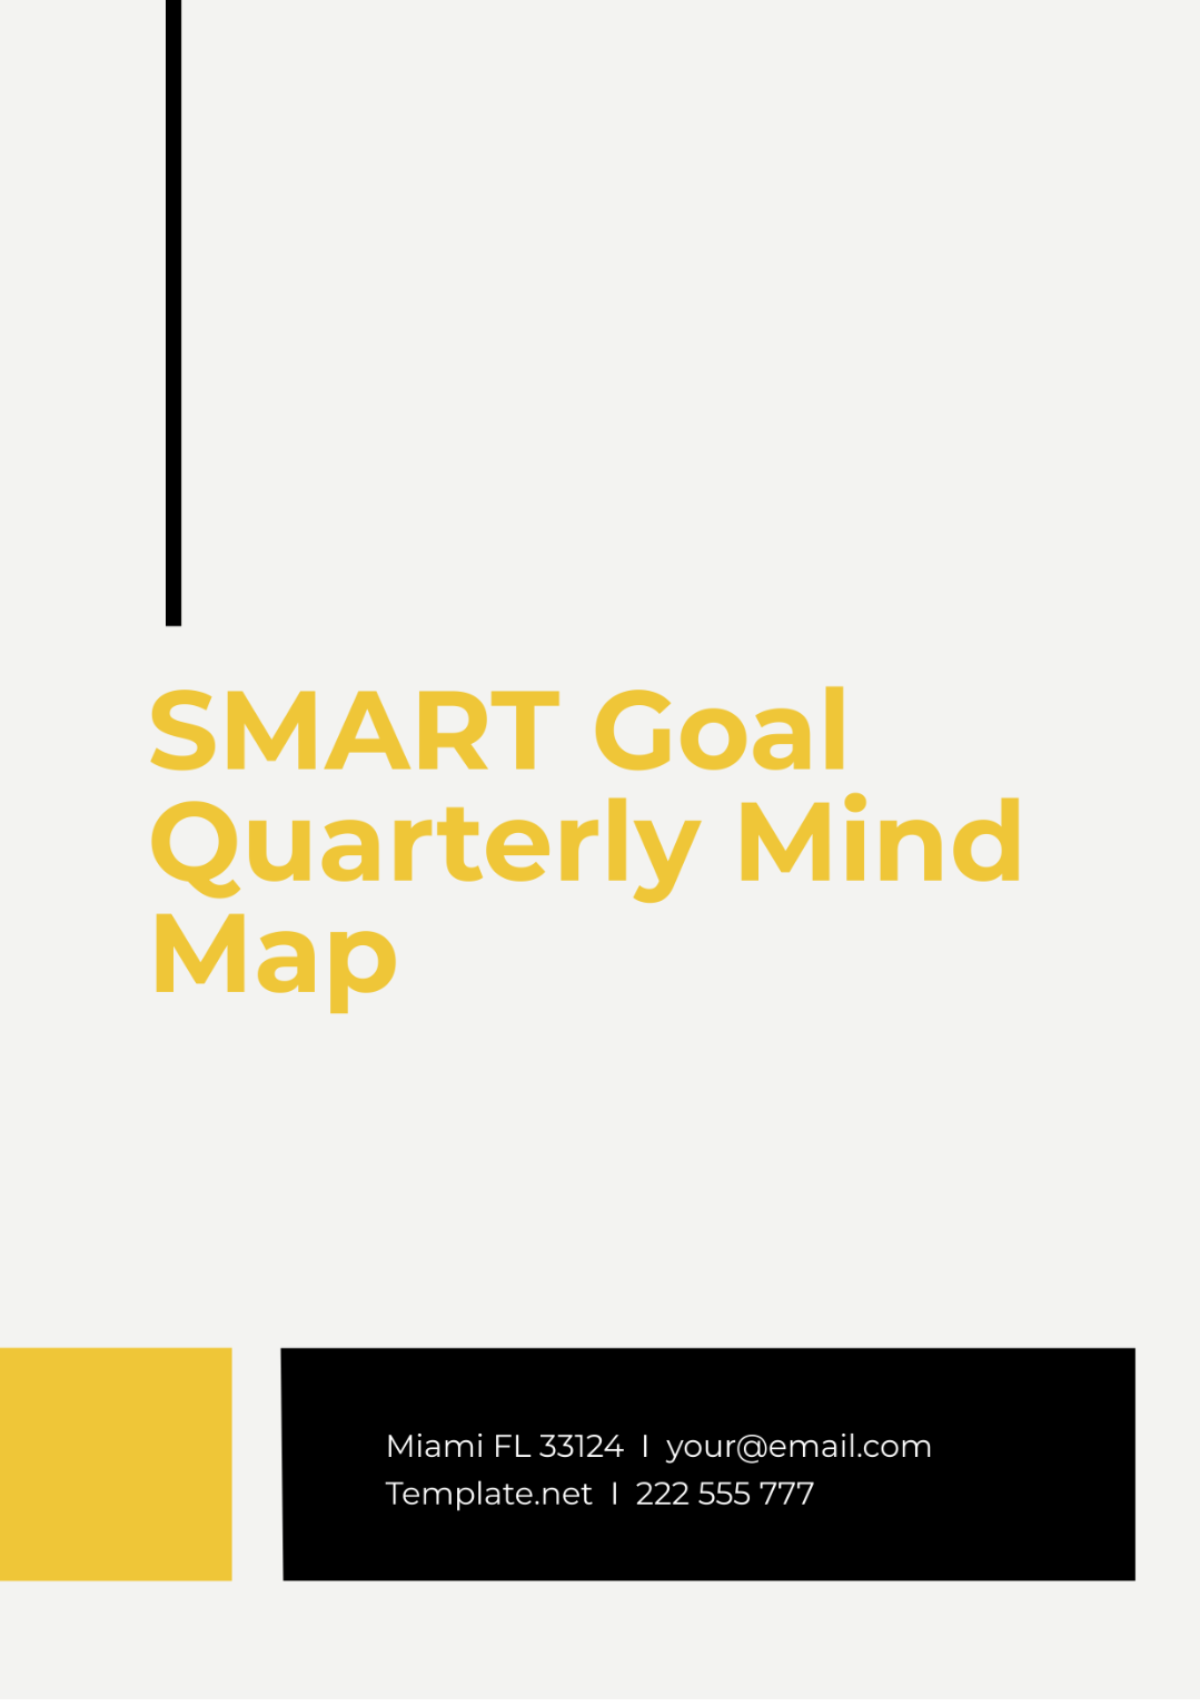 SMART Goal Quarterly Mind Map Template